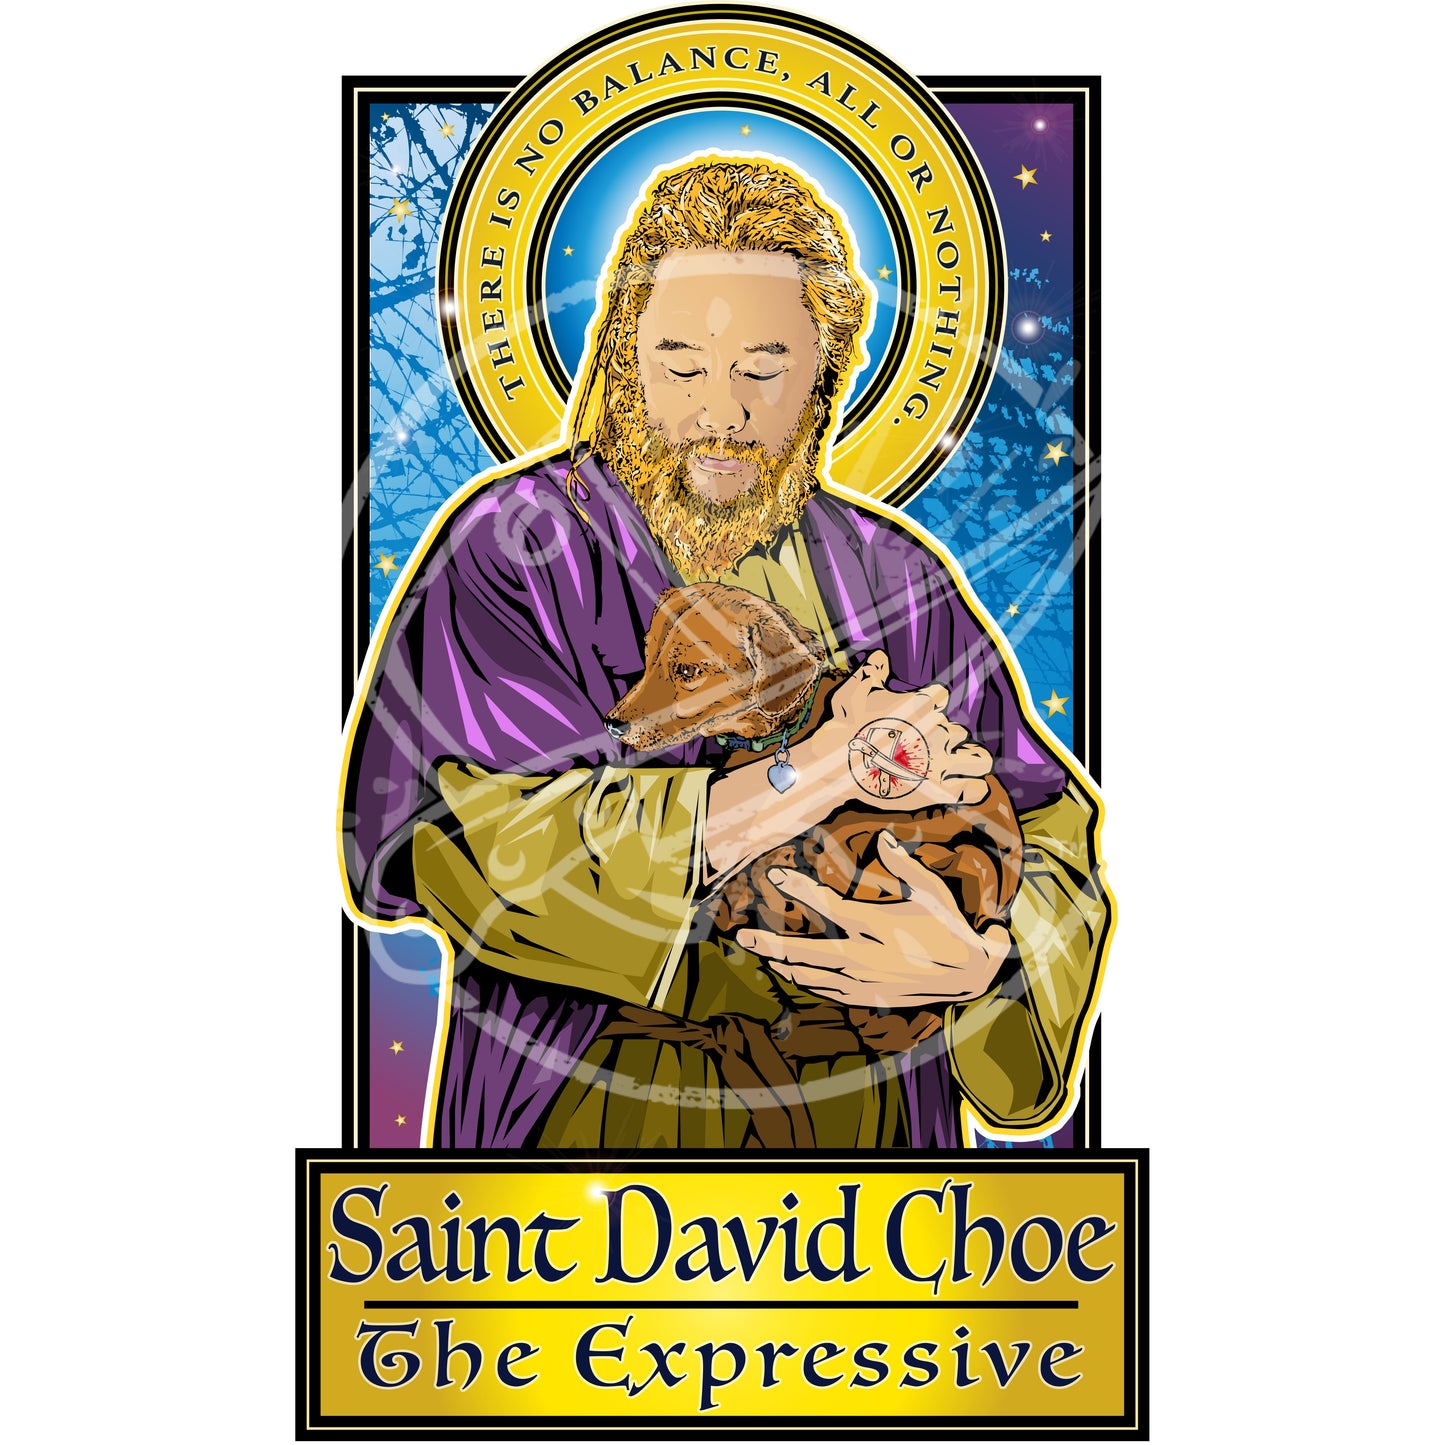 Saint David Choe The Expressive Poster Cleaverandblade.com